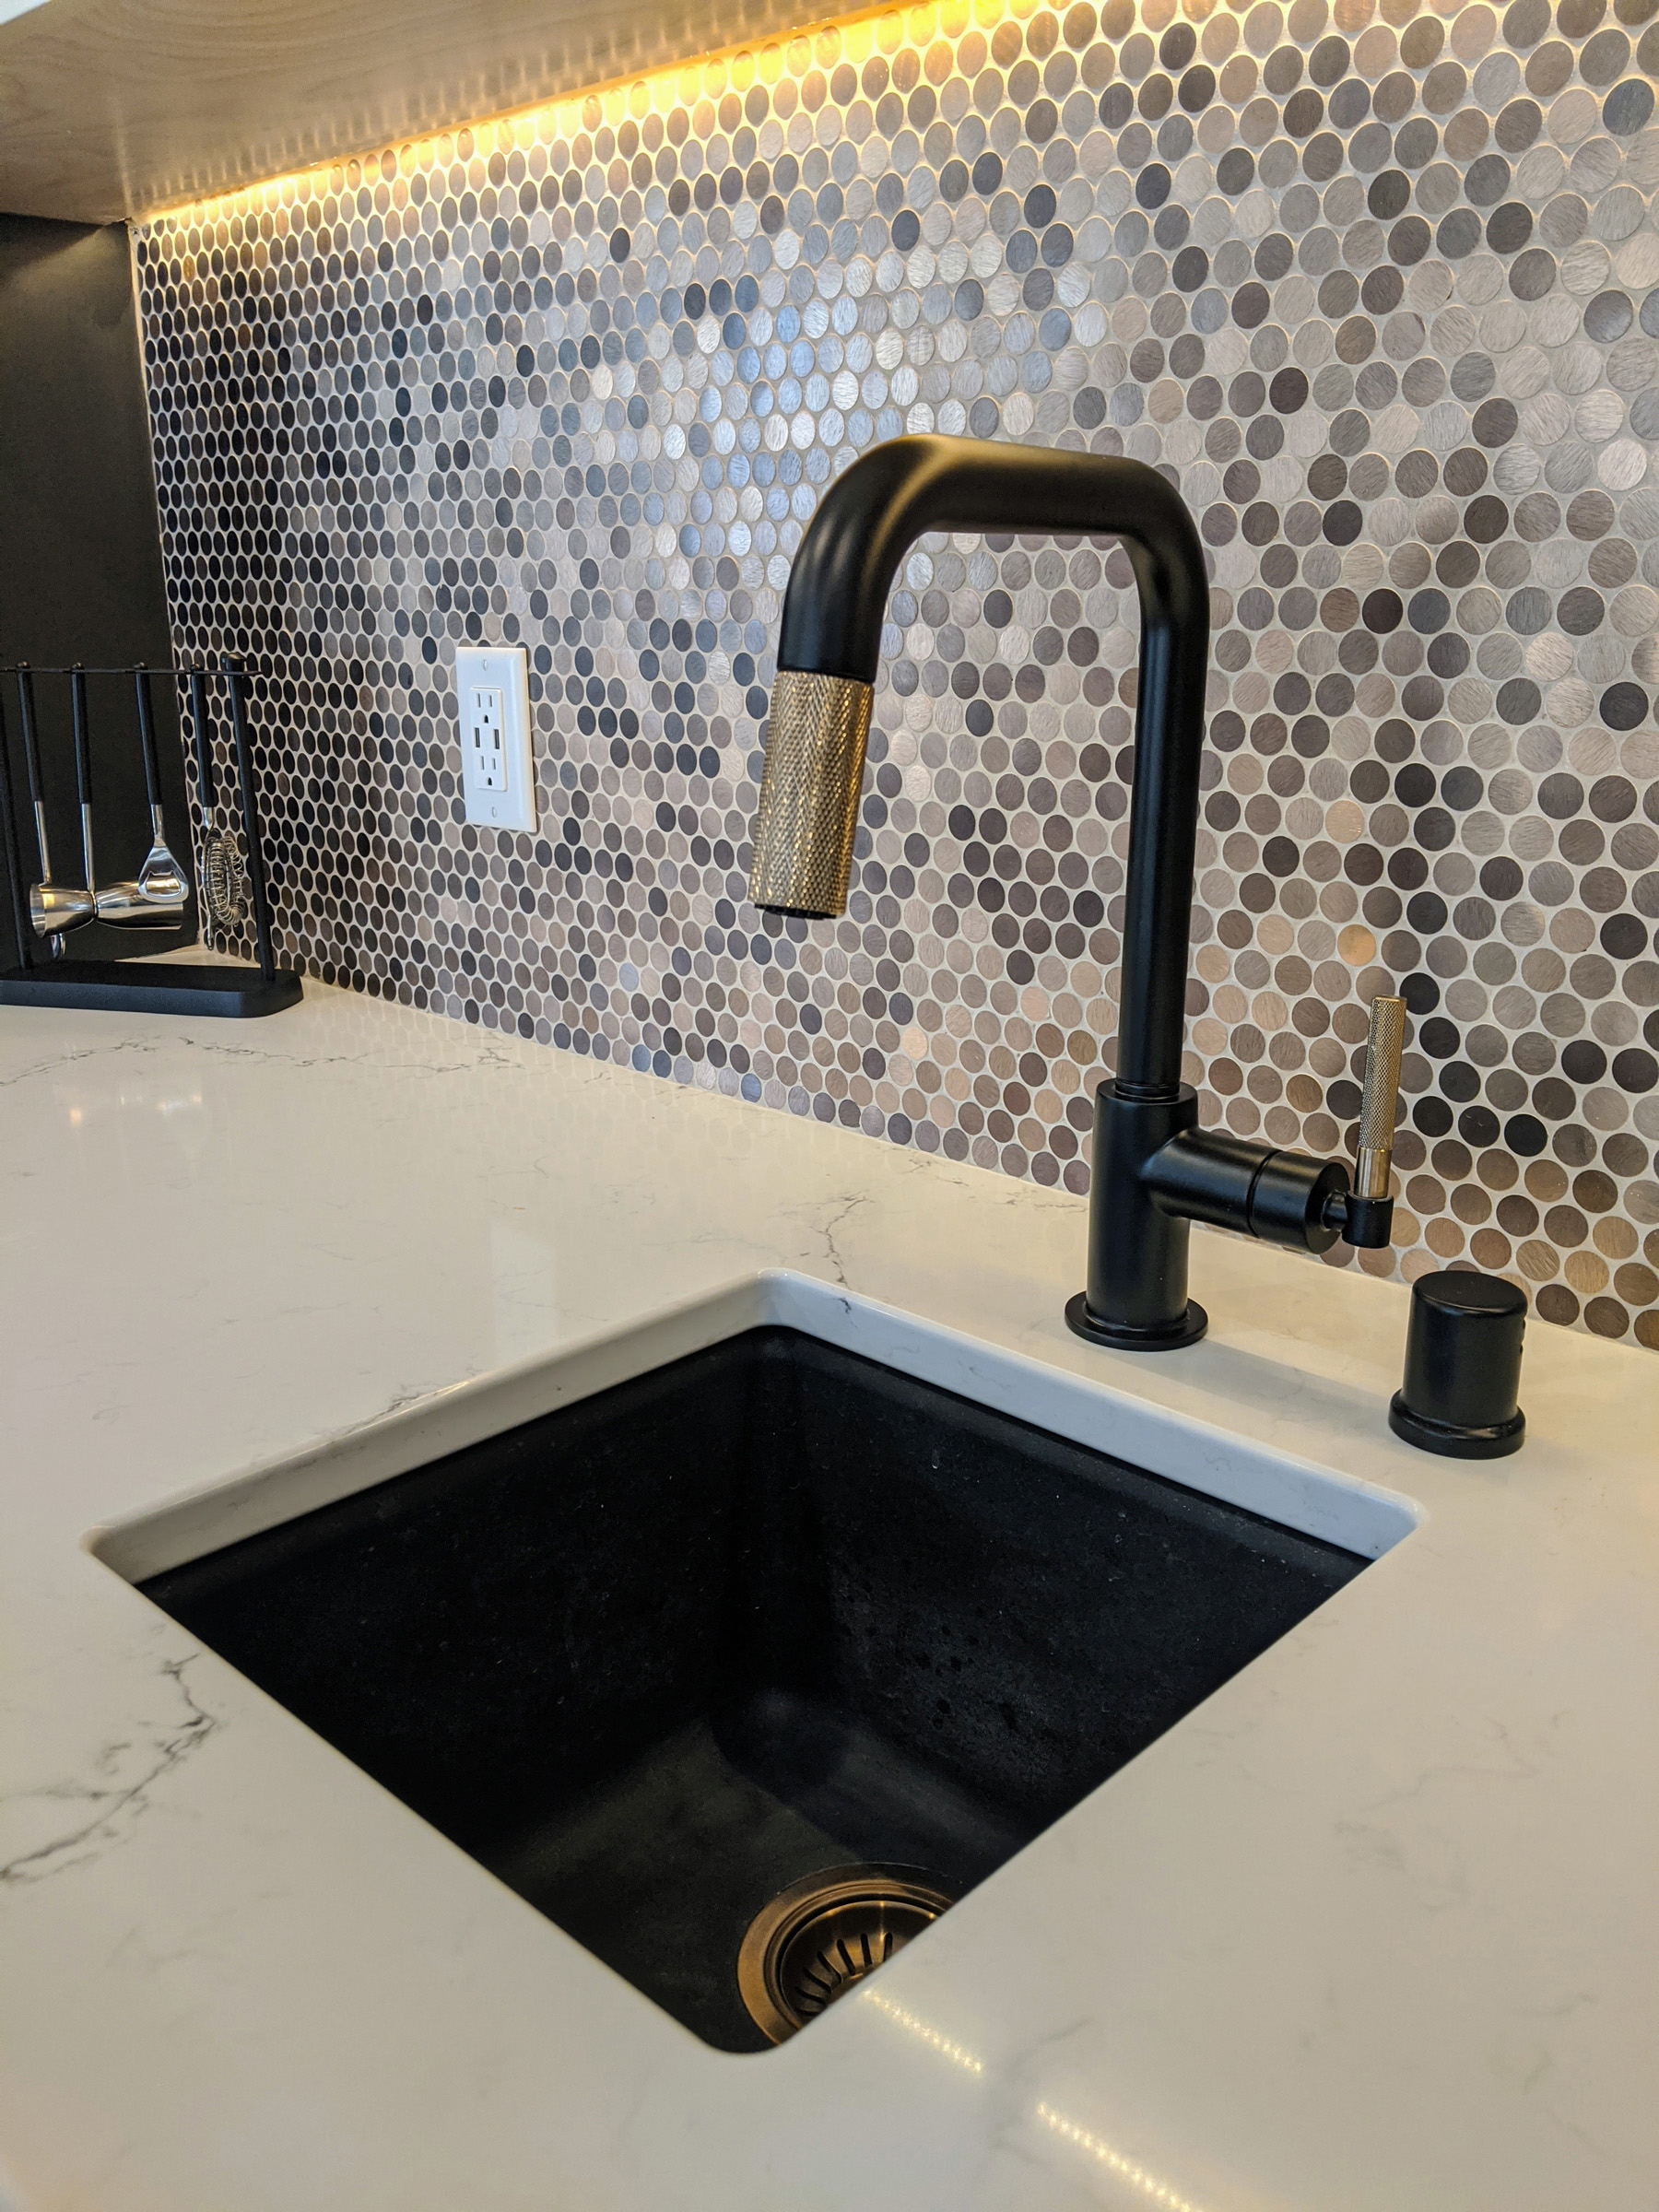 Quartz counters with Black granite sink, Black faucet w/ Champagne accents